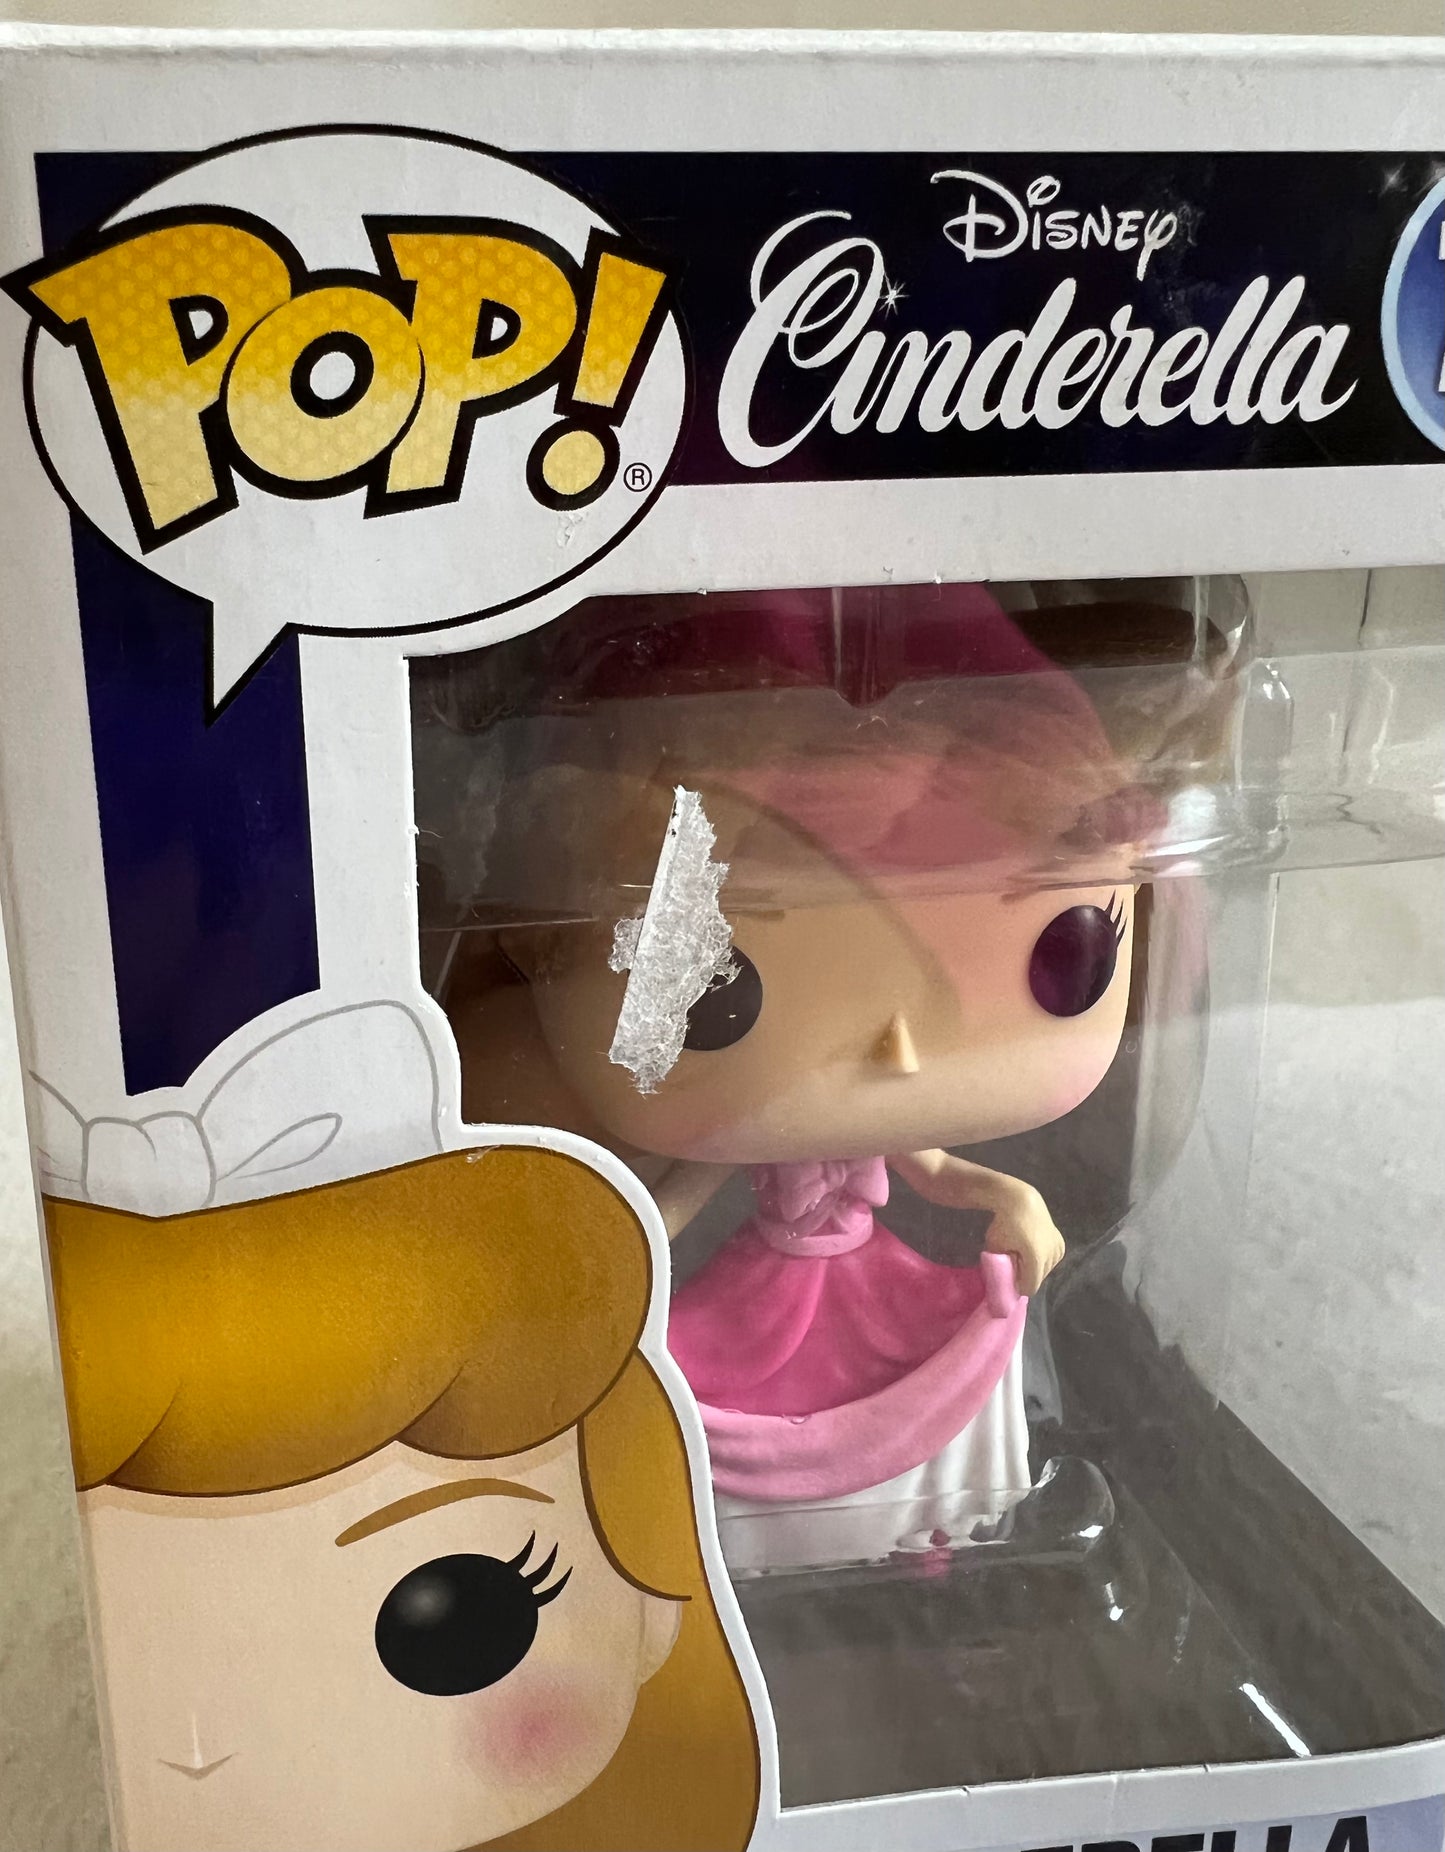 FUNKO POP! #738 Cinderella 'Disney'